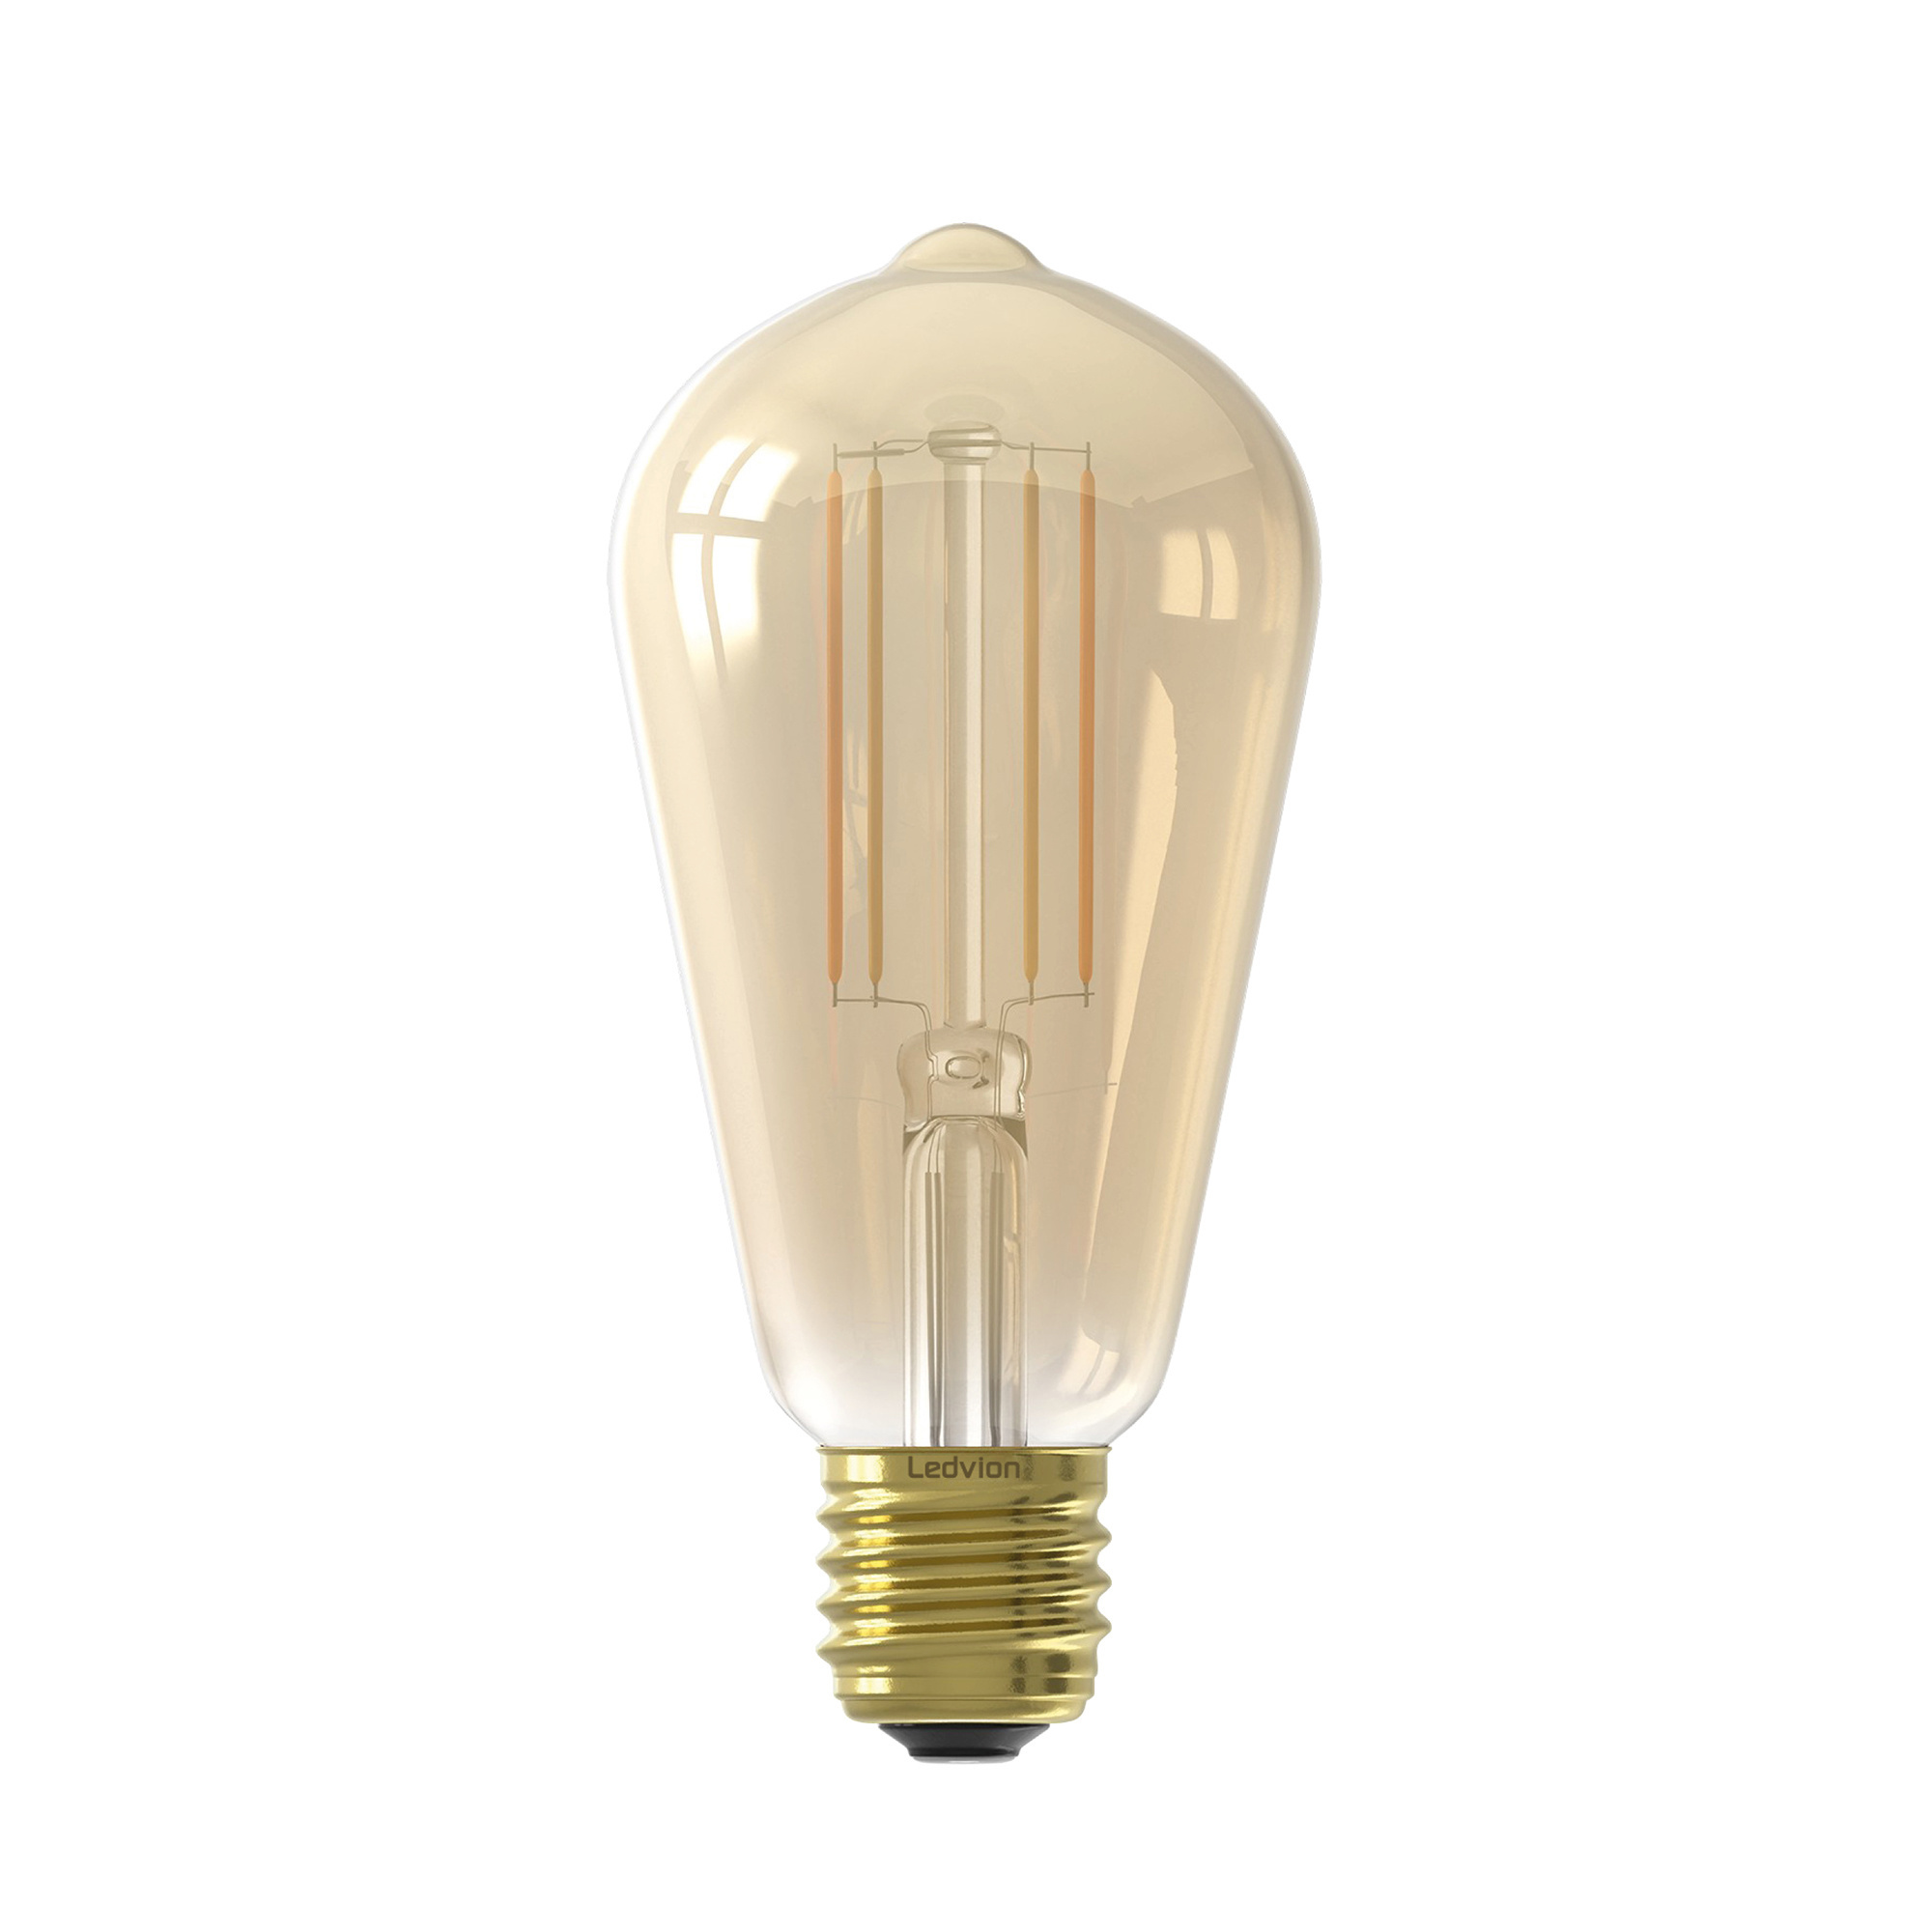 scherp ga zo door binnen Ledvion Dimbare E27 LED Lamp - 4.5W - 2100K - 470 Lumen - Lightexpert.nl